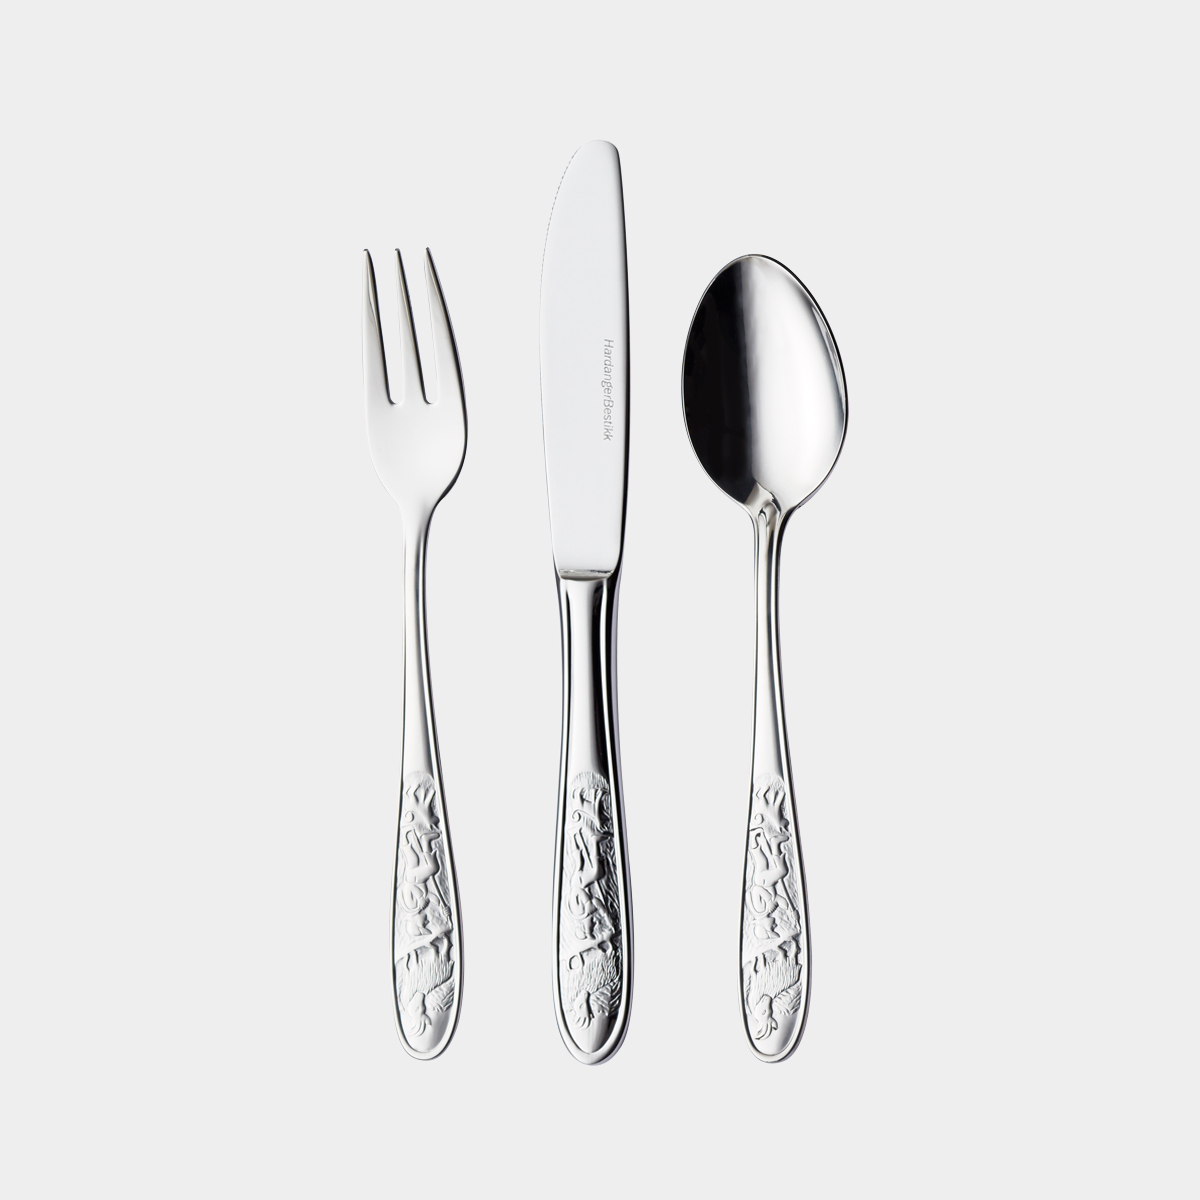 Hardanger children cutlery product image